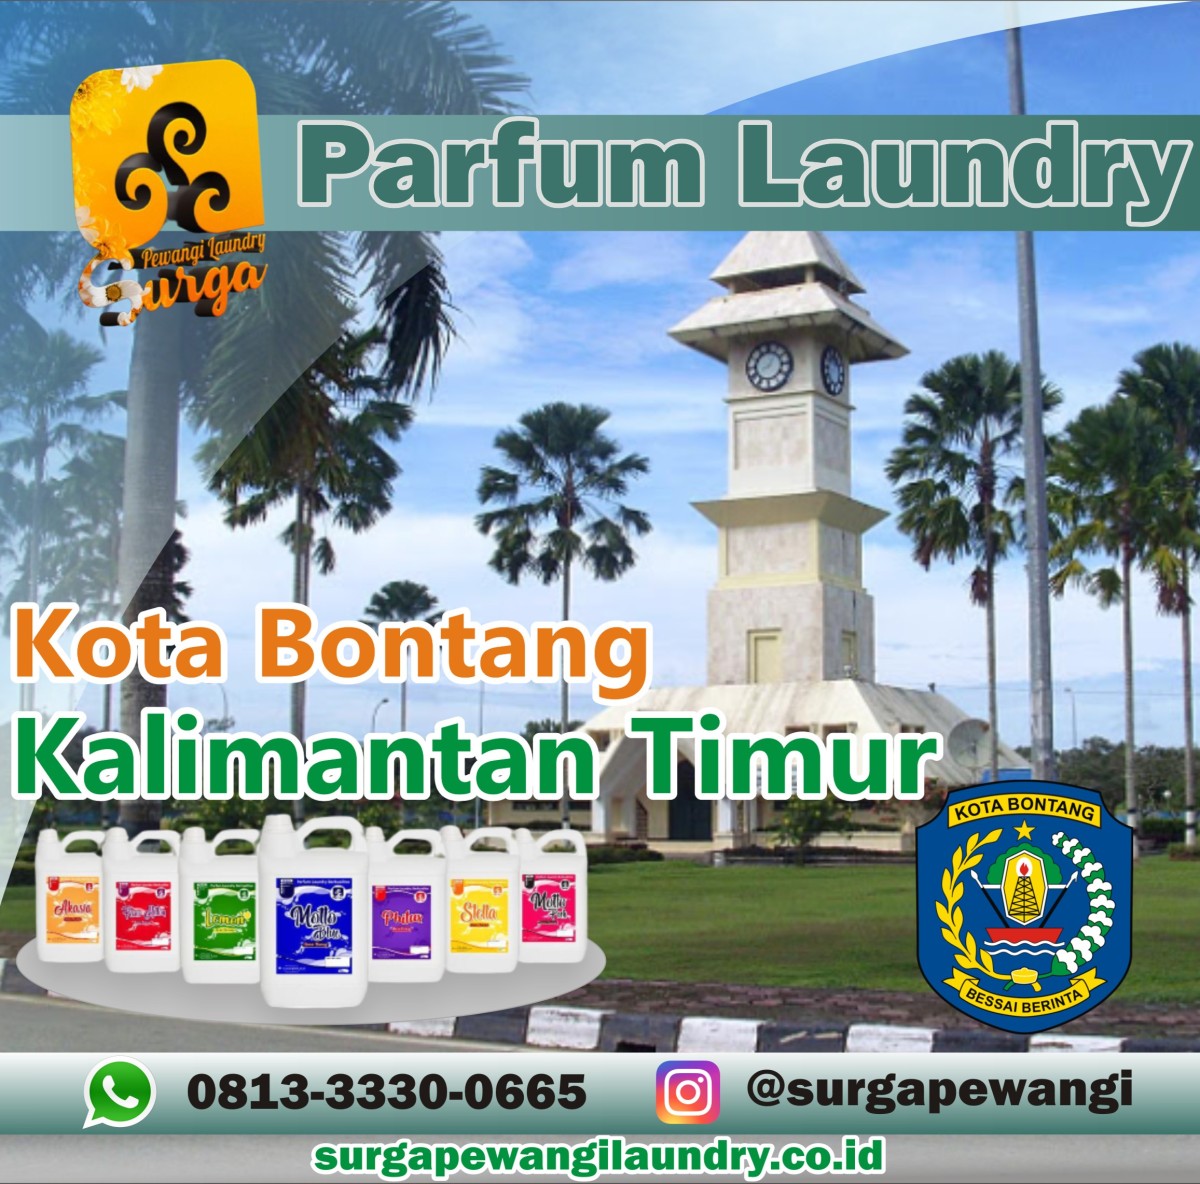 Parfum Laundry Kota Bontang, Kalimantan Timur